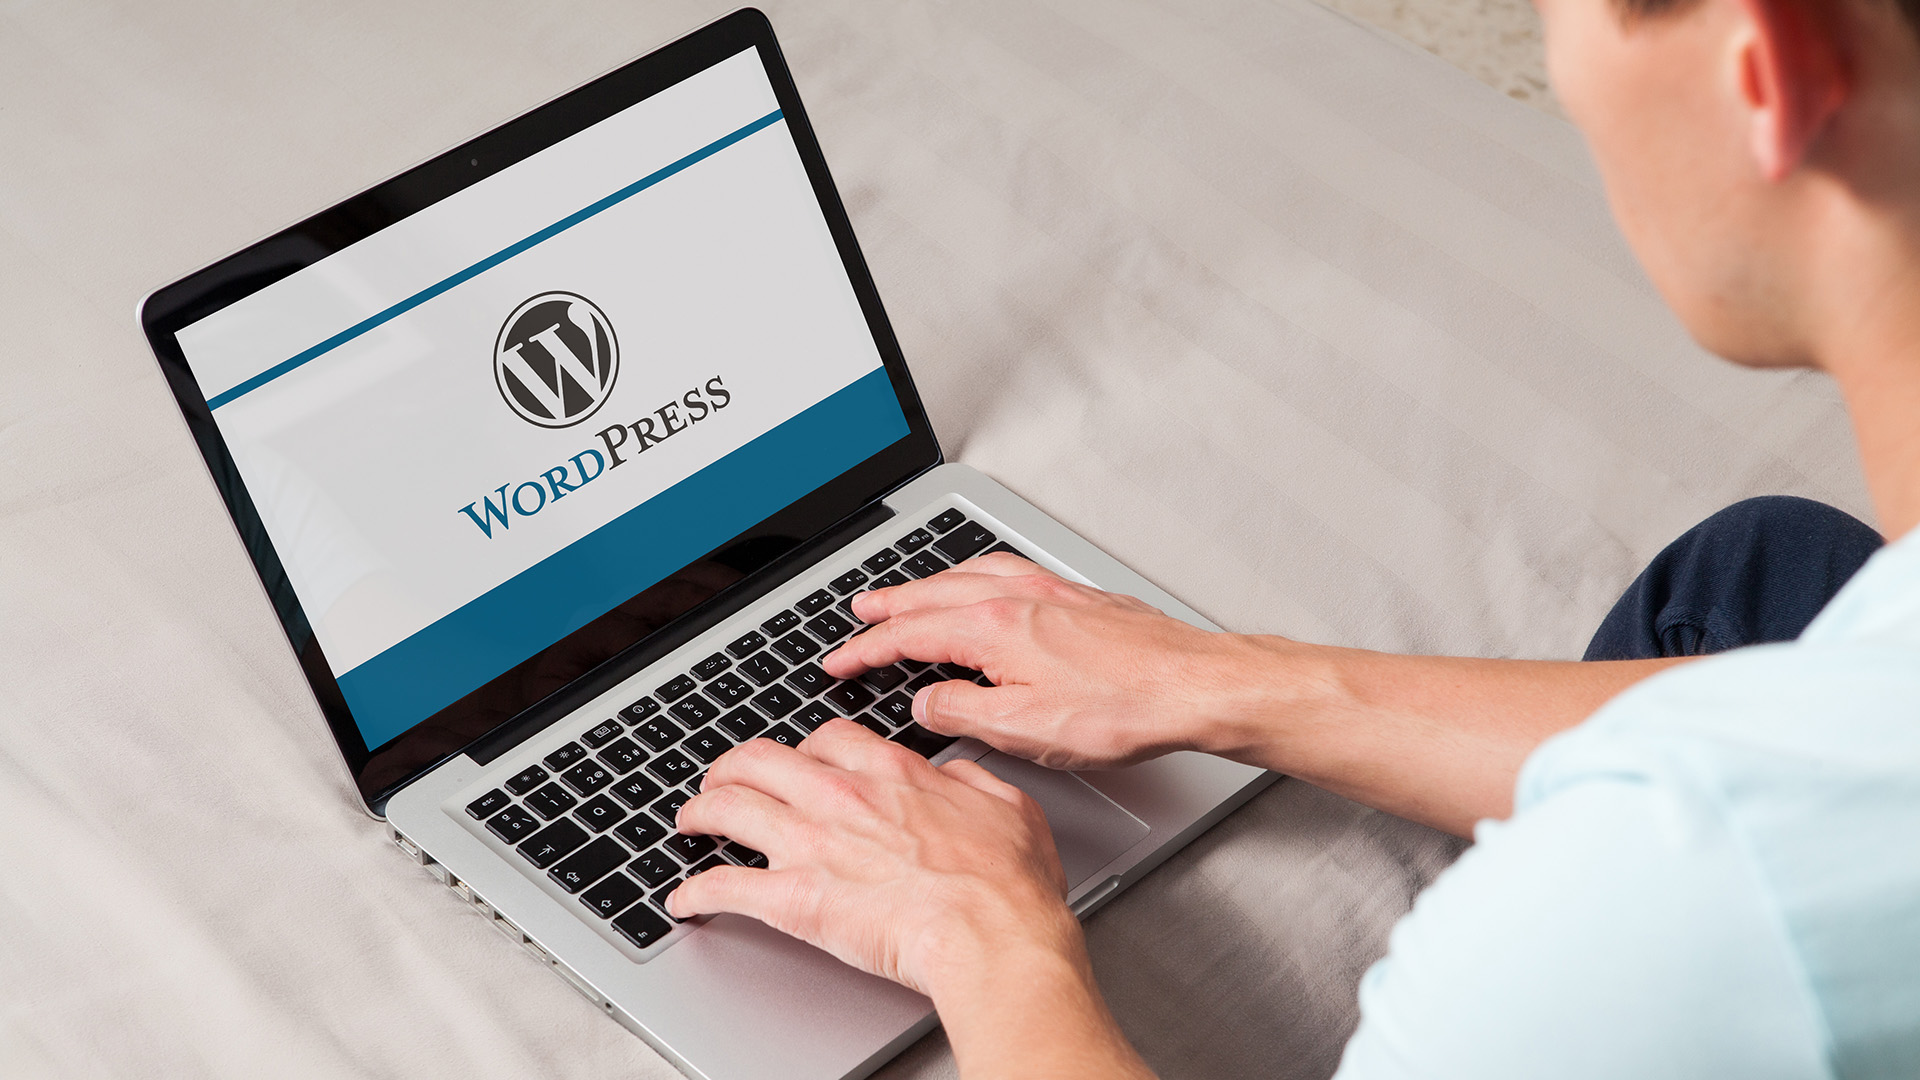 WordPress 5.5 “Eckstine” Release is Here!